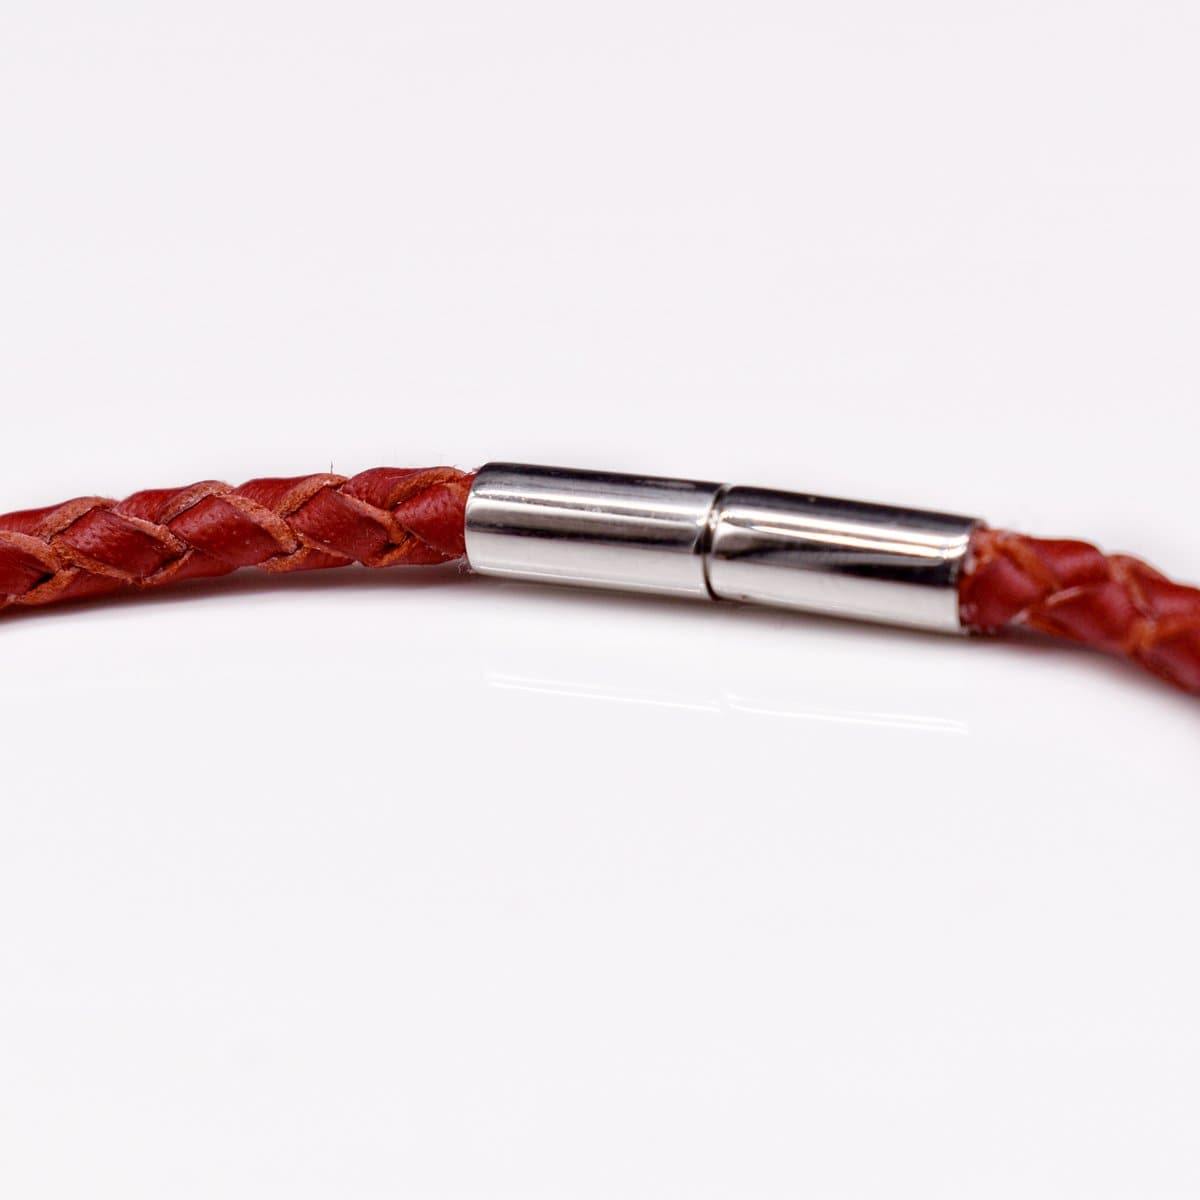 Kangaroo Leather Necklace - Akuna Pearls